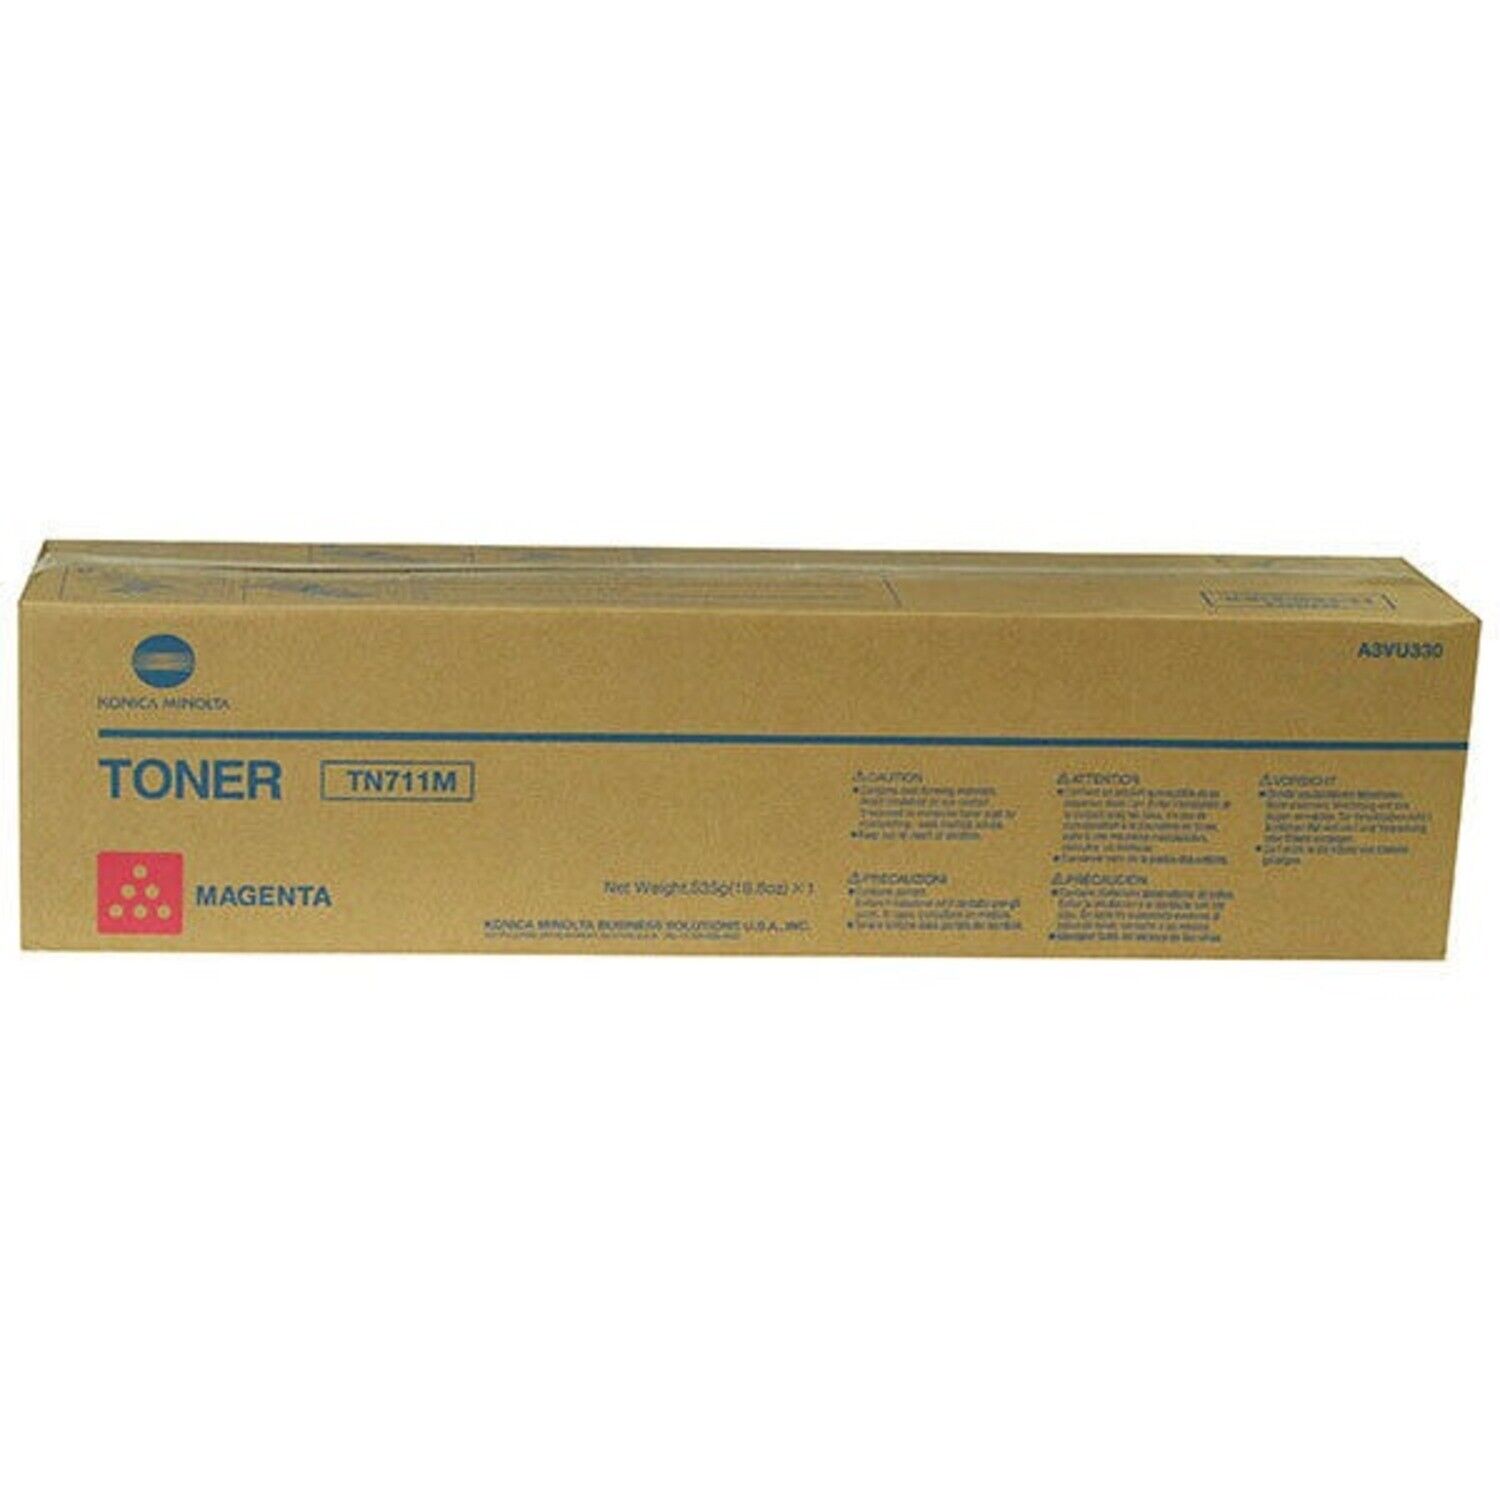 Genuine Konica Minolta Magenta Toner Cartridge, TN711M, 31500 Yield (A3VU330)